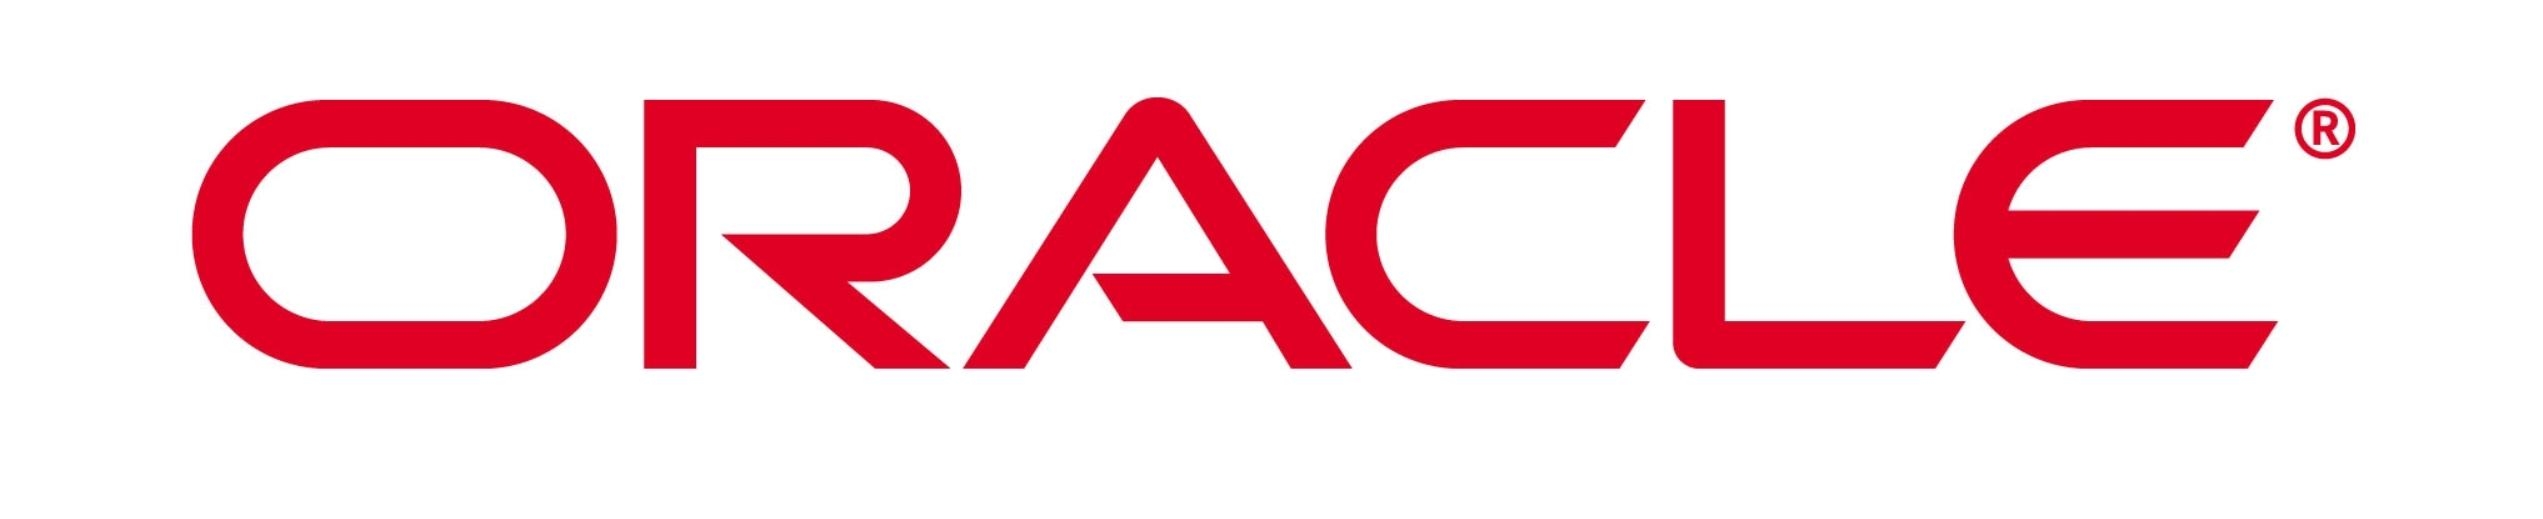 капитализация компании Oracle Corporation 